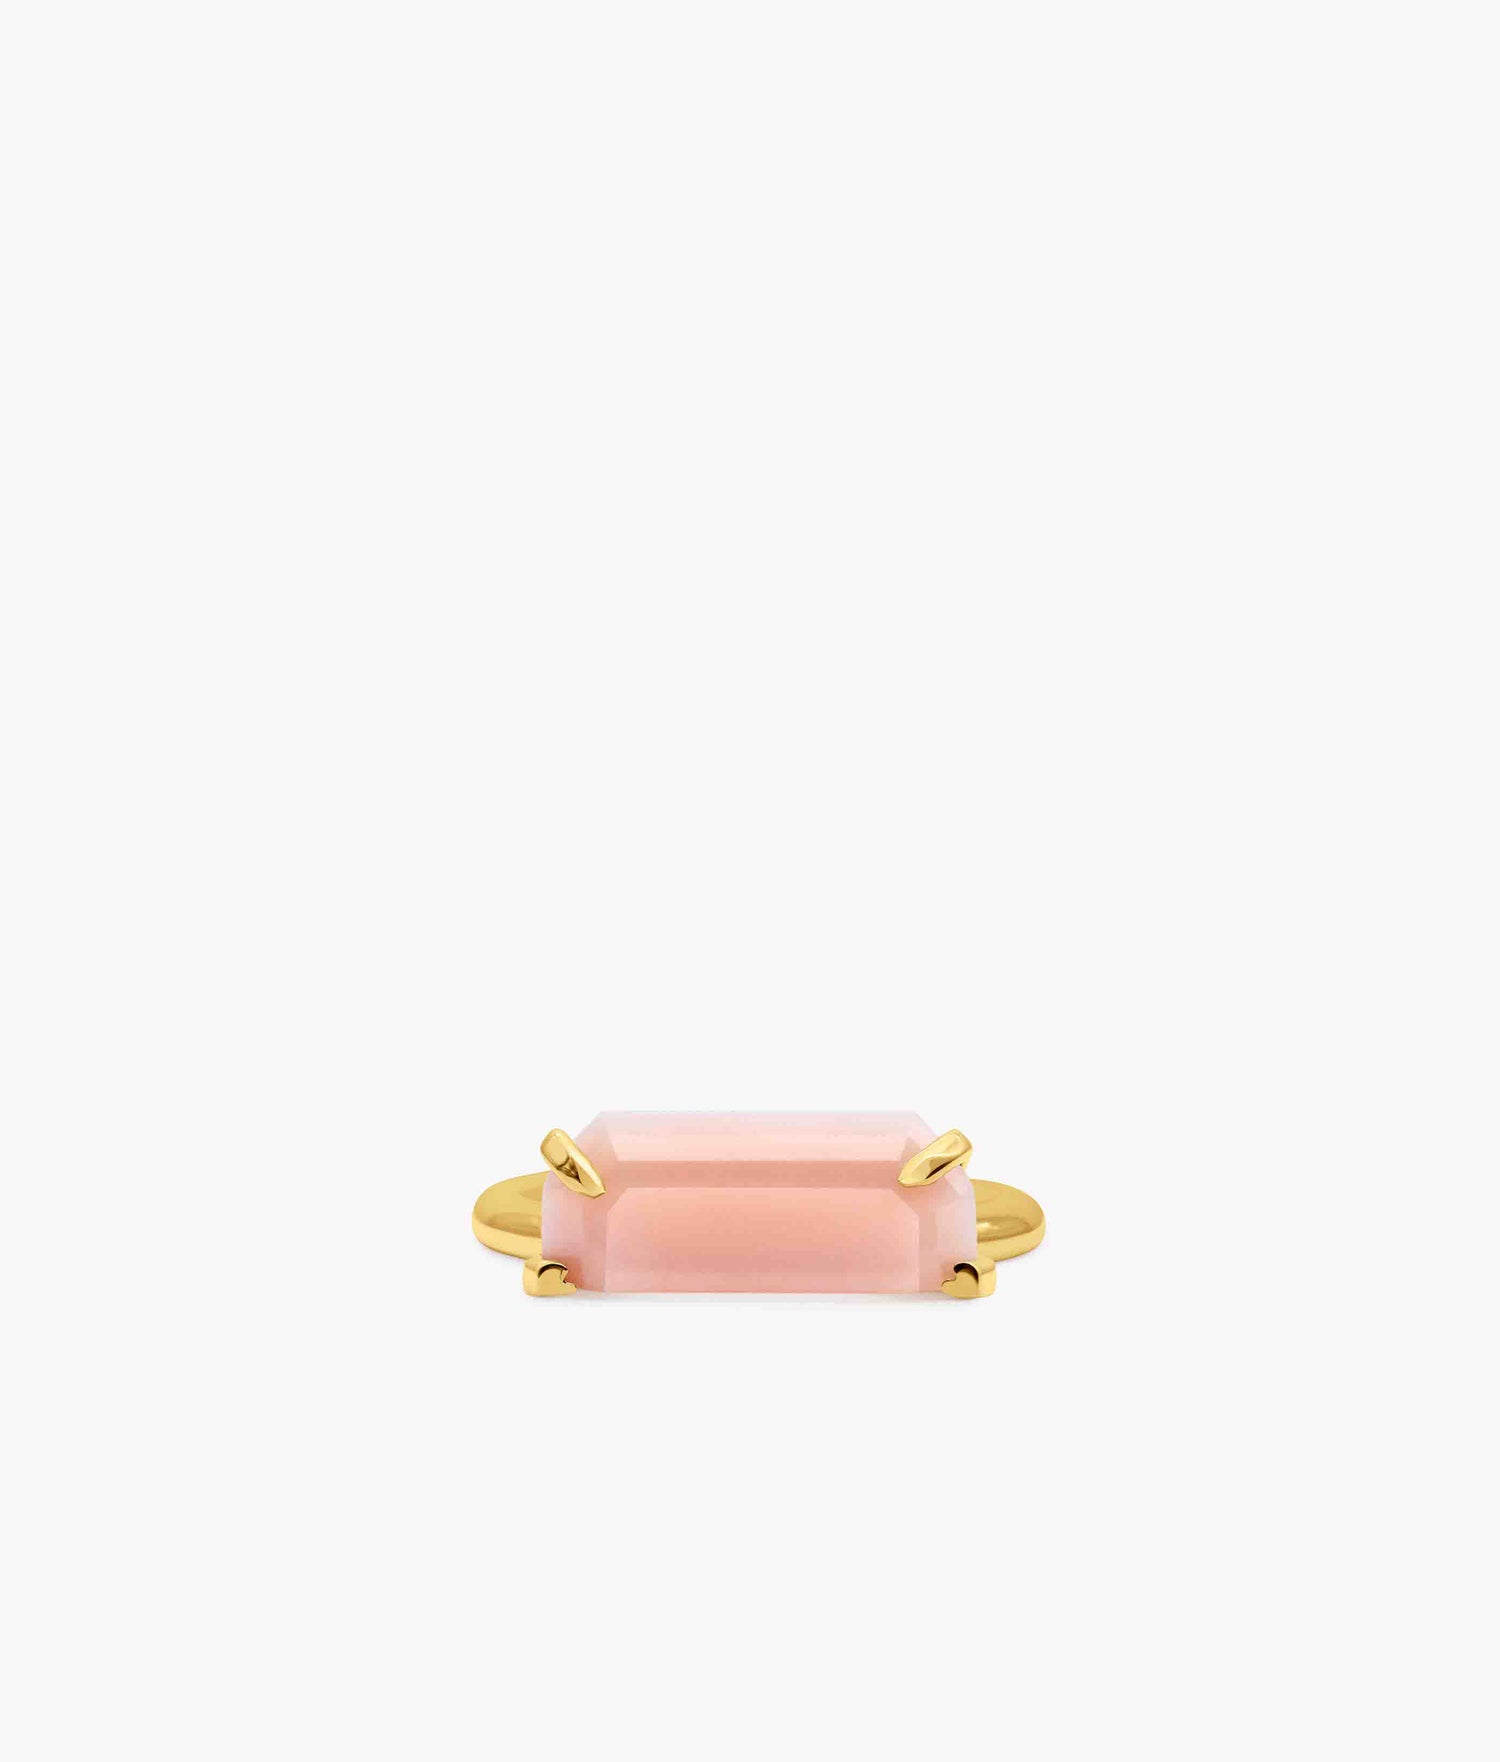 Half Cut Pink Opal Ring